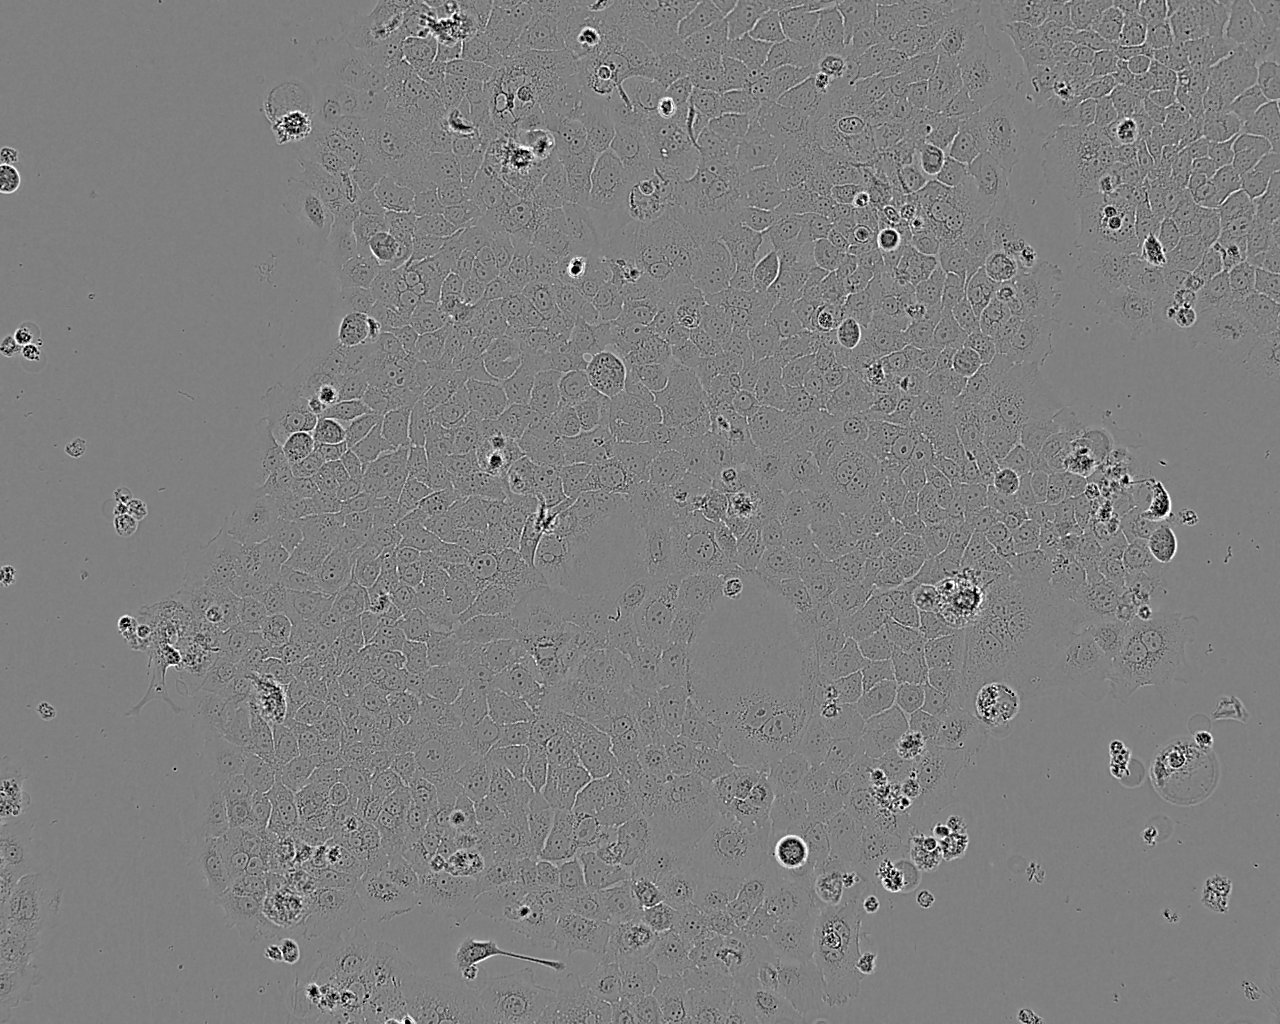 WM239A epithelioid cells人黑色素瘤细胞系